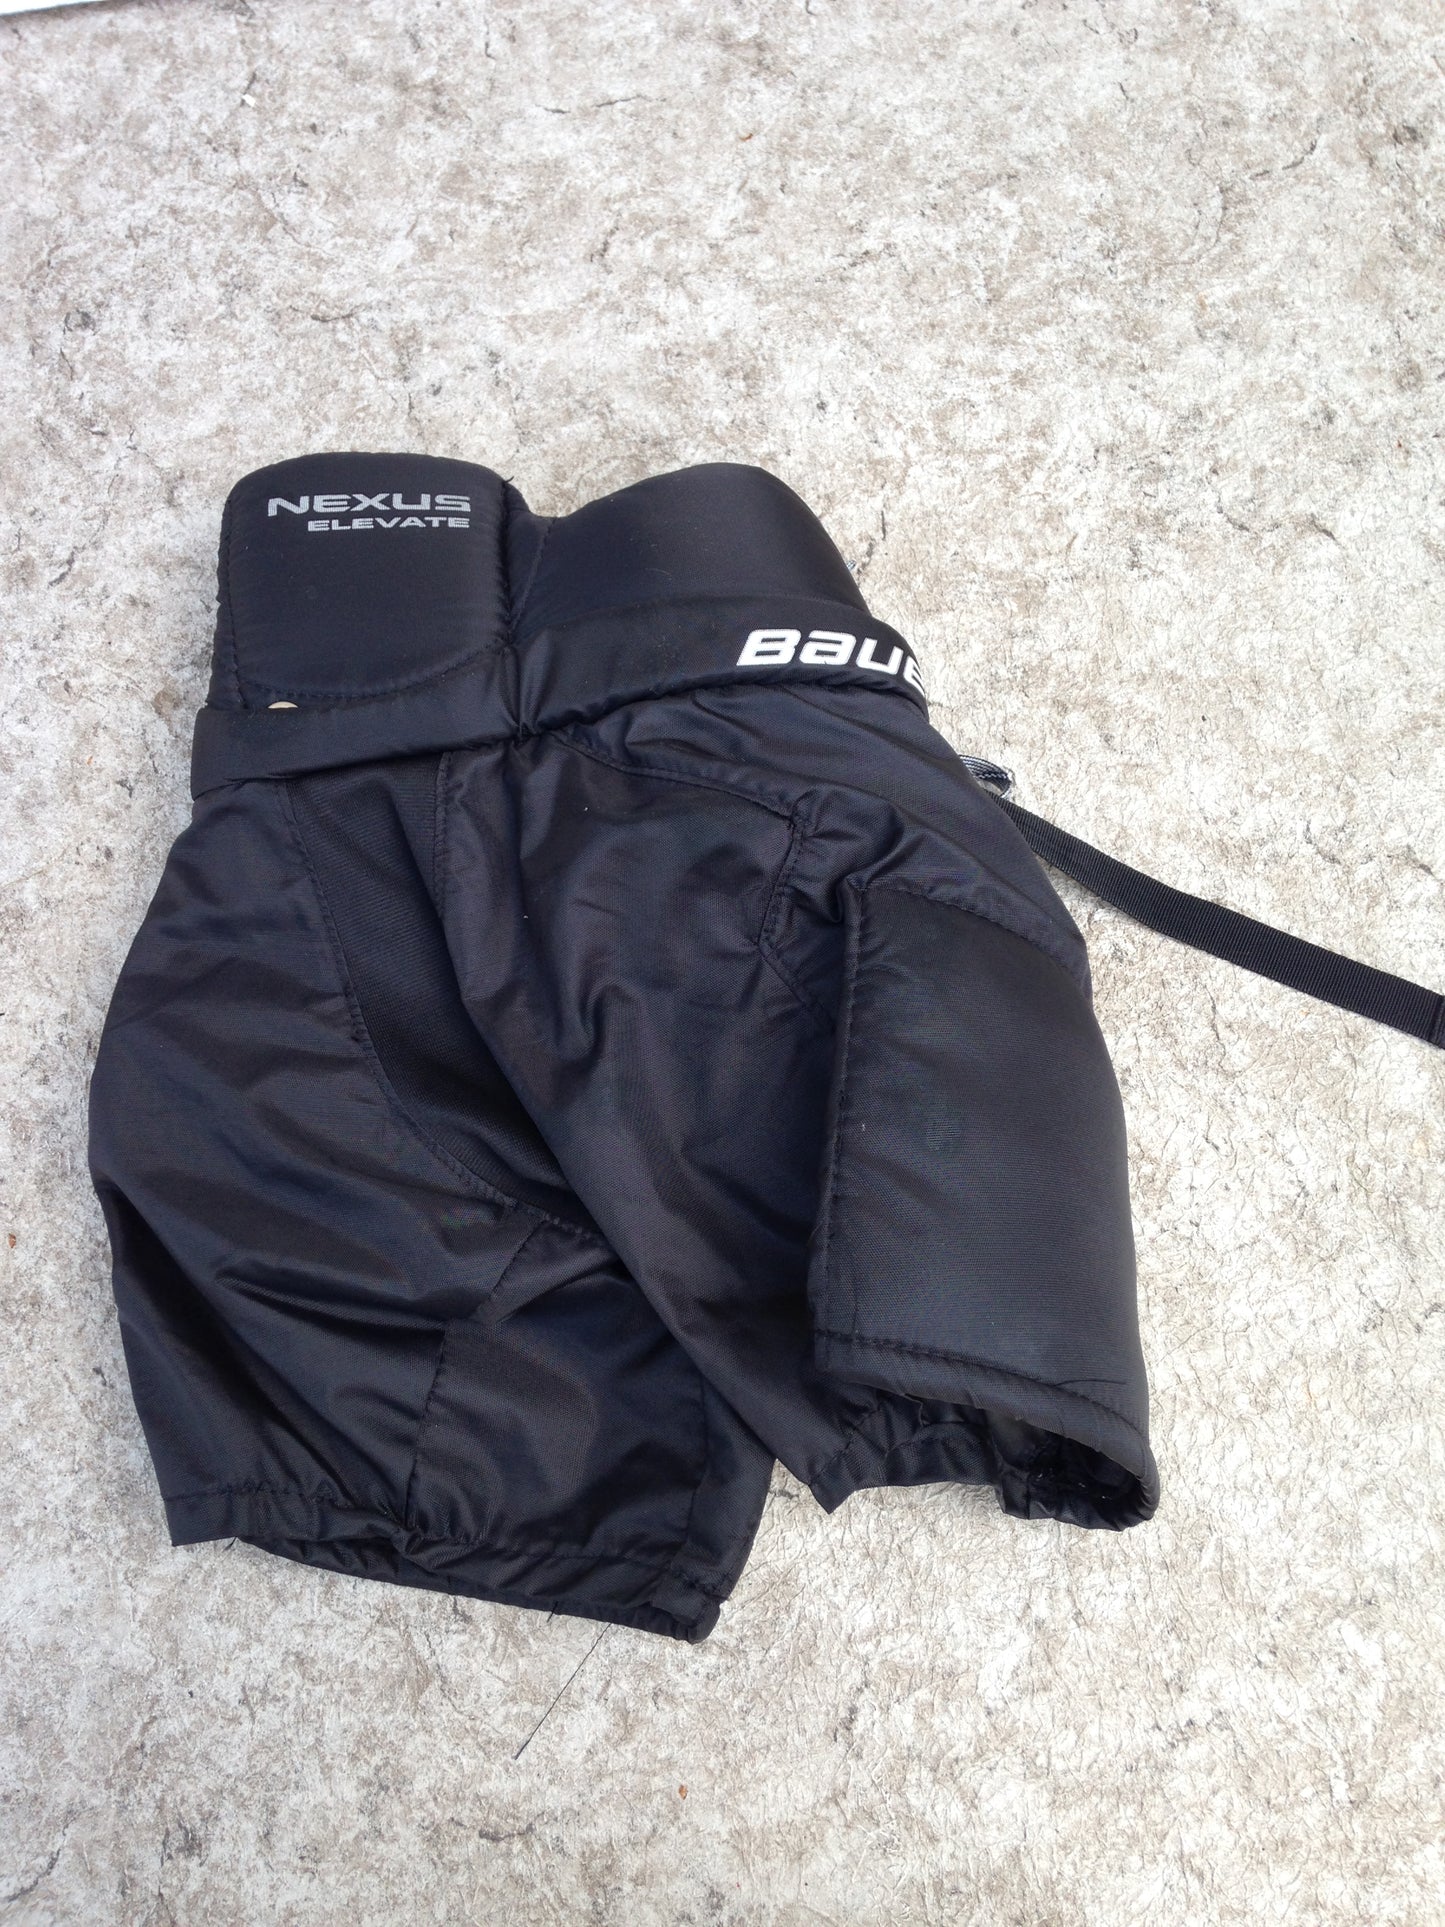 Hockey Pants Child Size Y Small Bauer Nexus Black